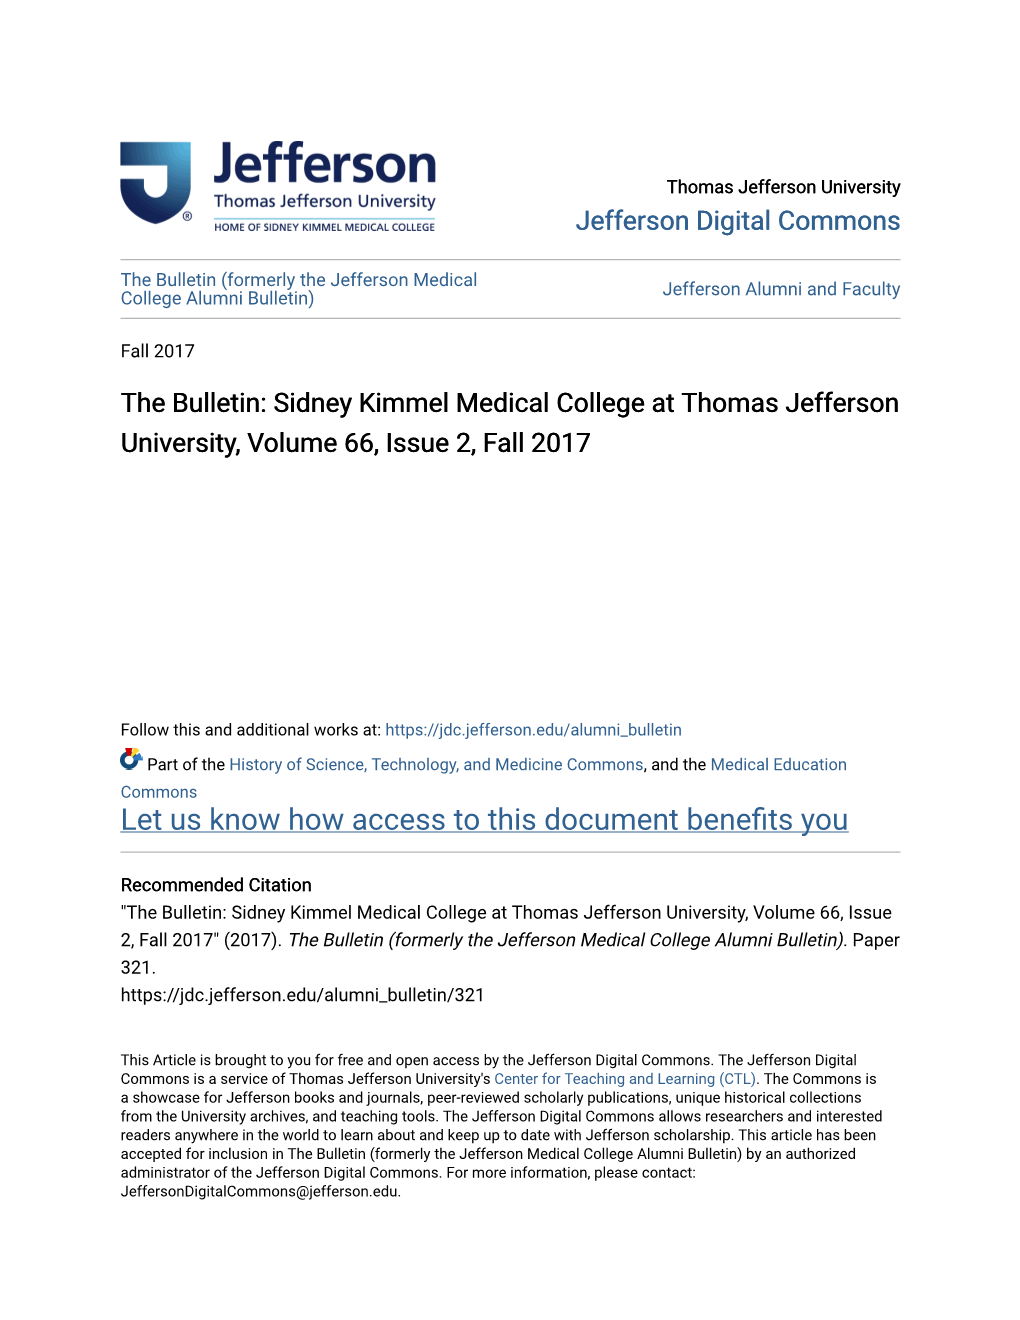 The Bulletin: Sidney Kimmel Medical College at Thomas Jefferson University, Volume 66, Issue 2, Fall 2017